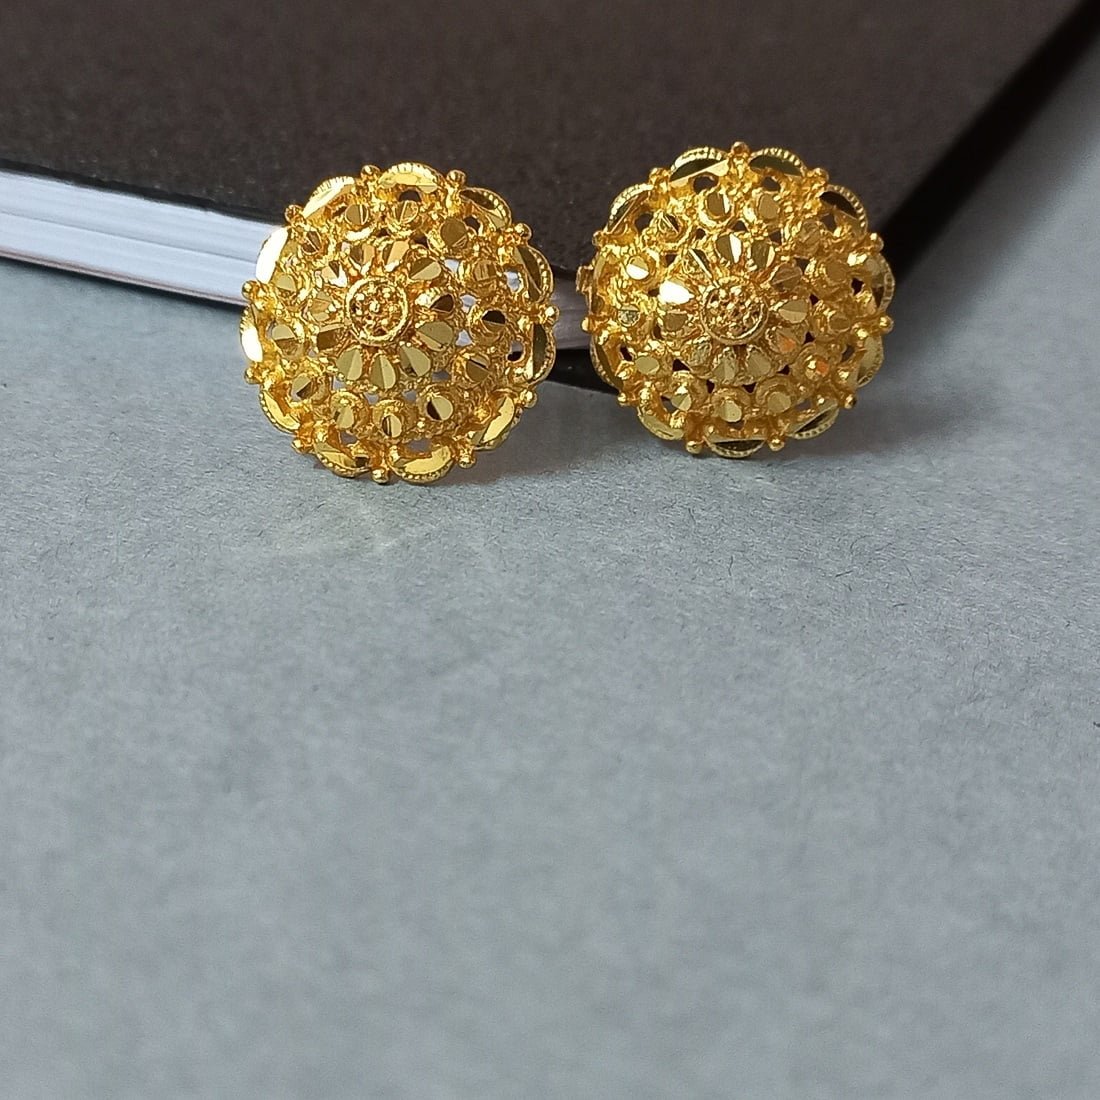 Real Gold & Natural Diamonds Party Designer Diamond Earrings at Rs  156000/pair in Mumbai